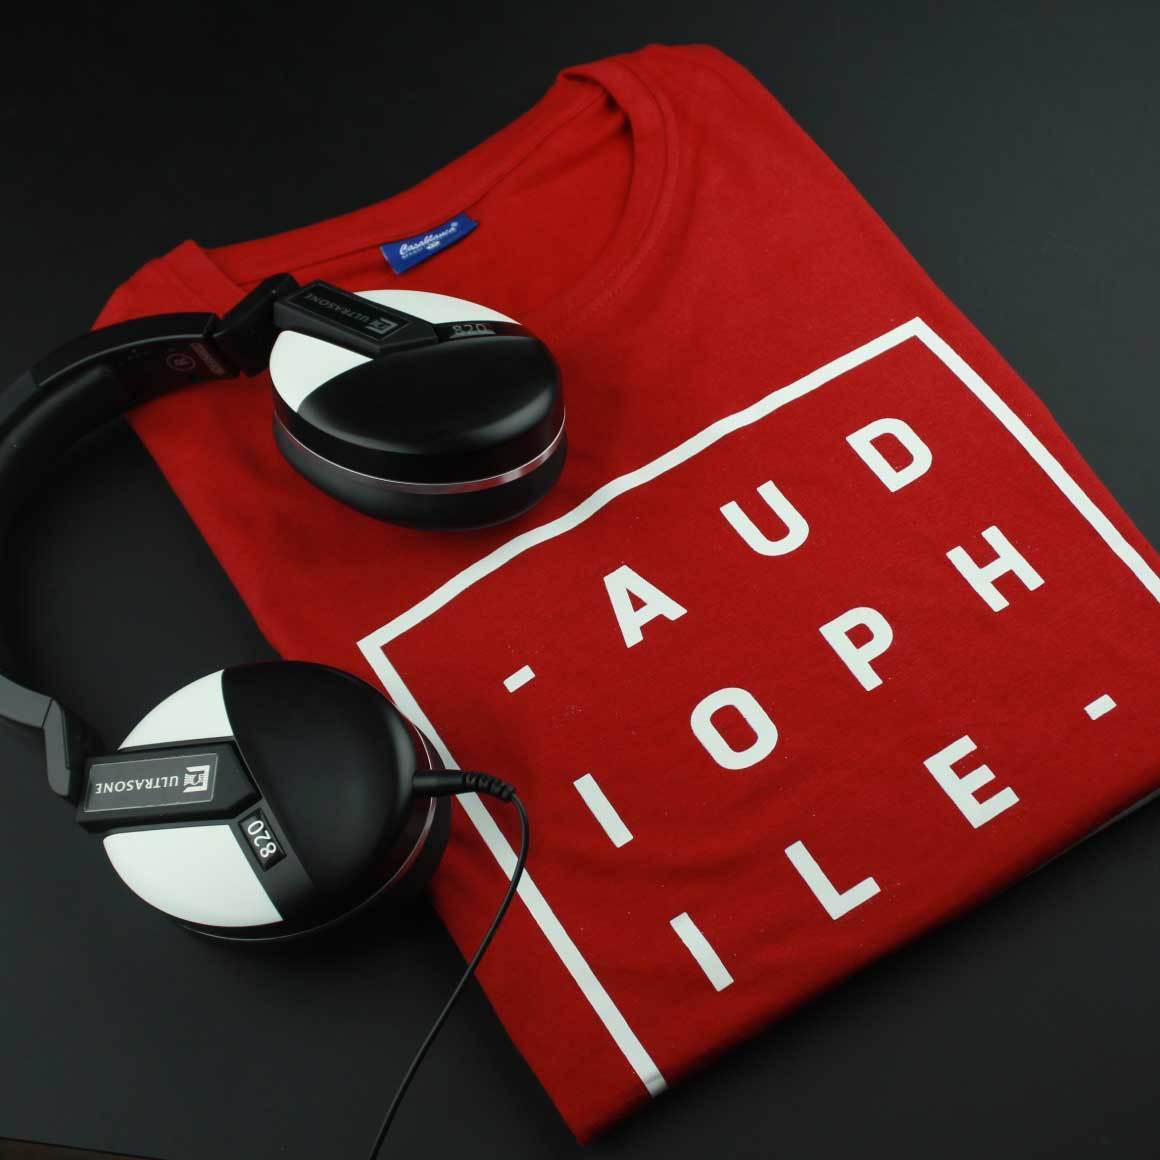 Headphone-Zone-Professed Audiophile T-Shirt